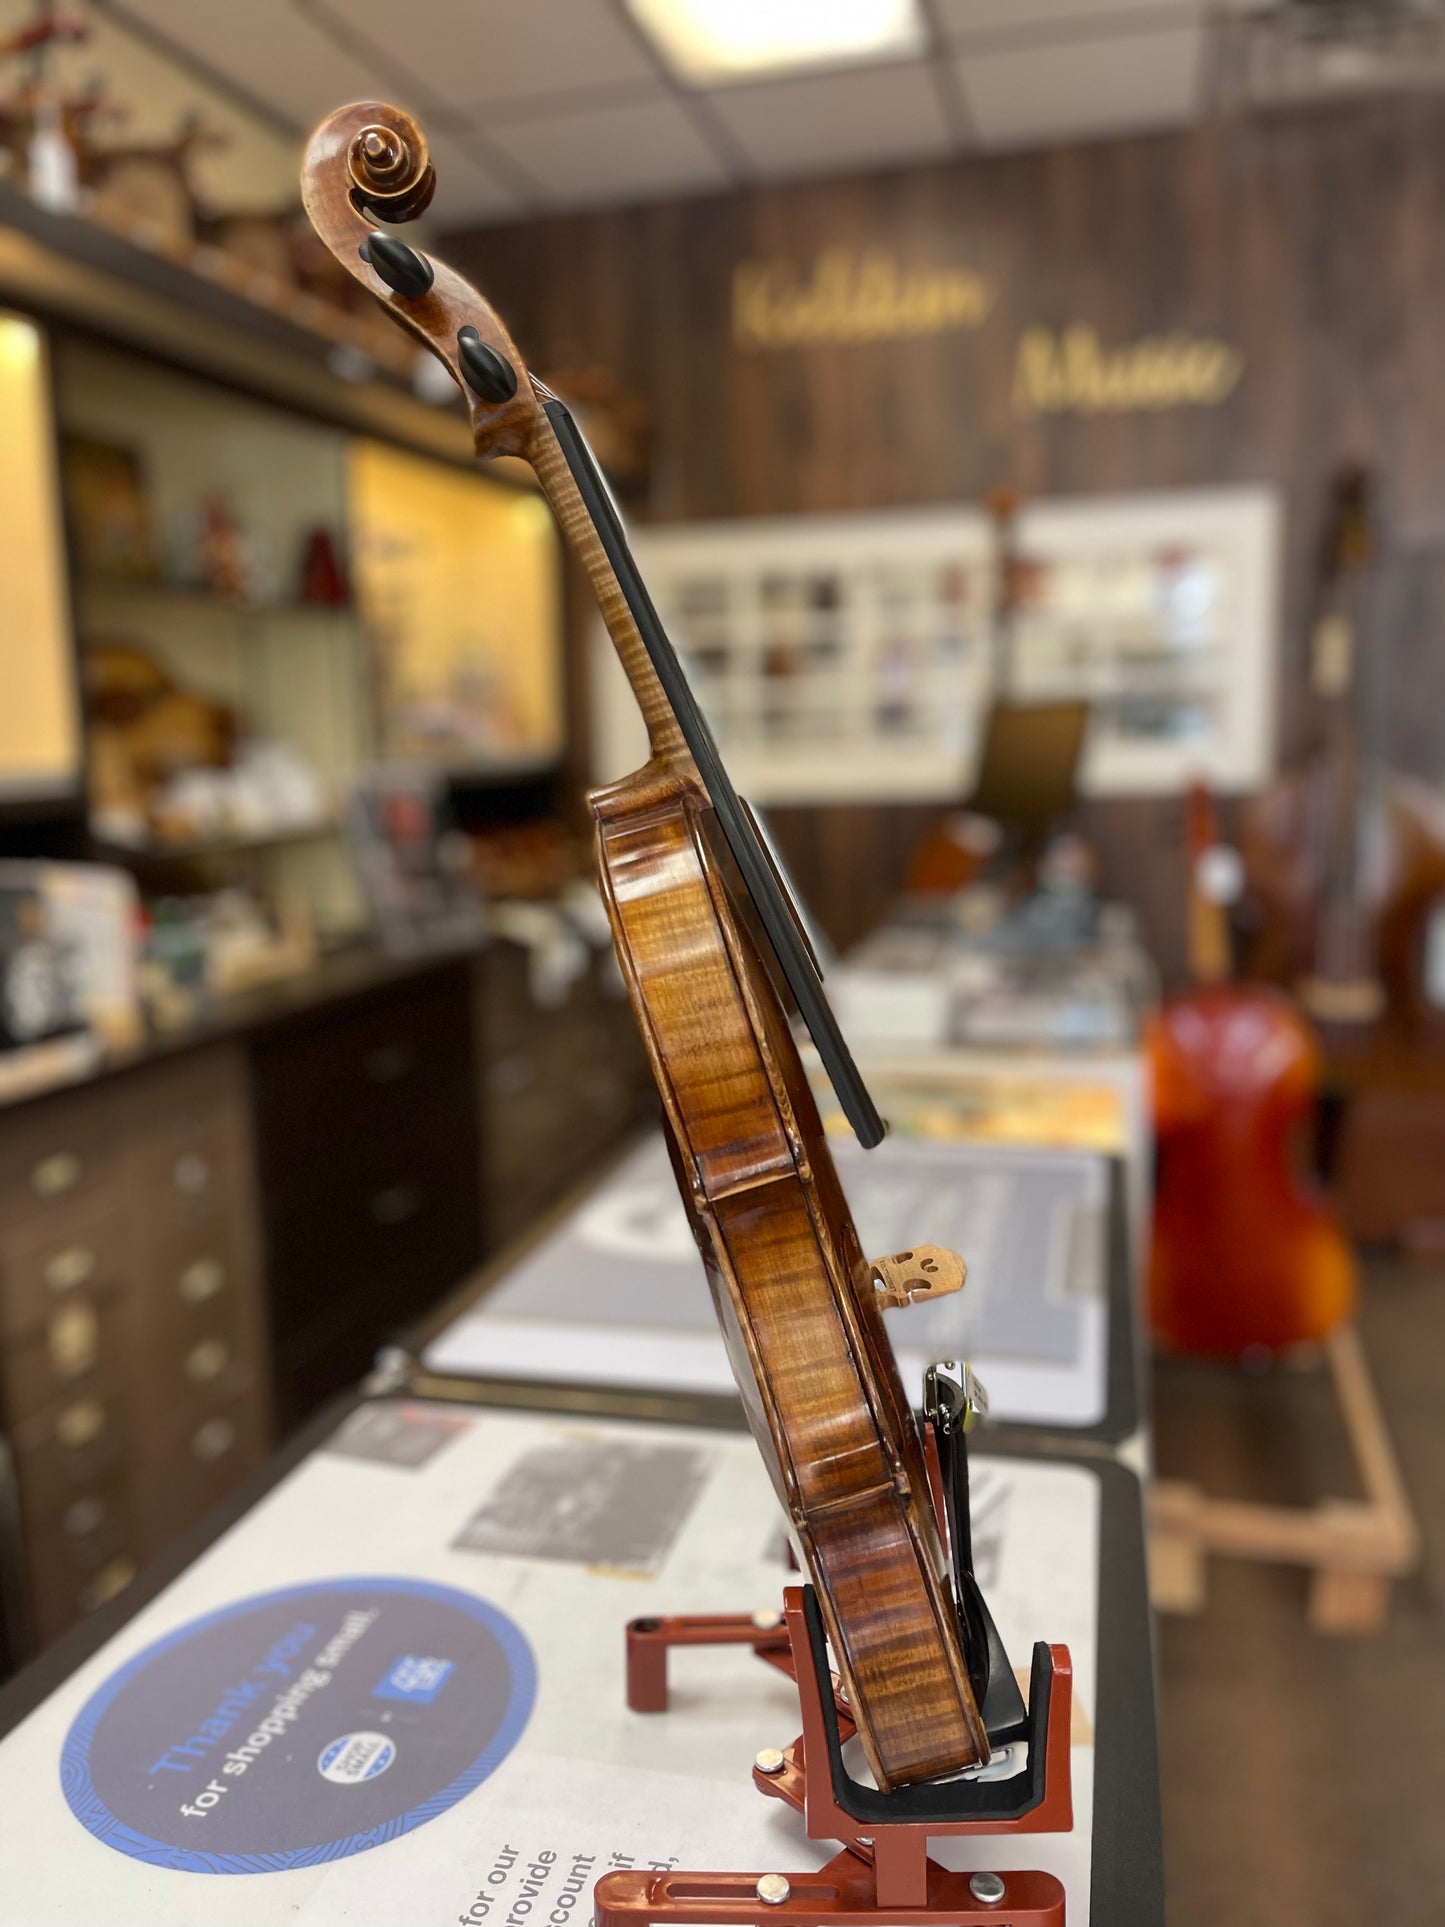 Mairead Nesbitt Matthias Albani Copy Model Violin